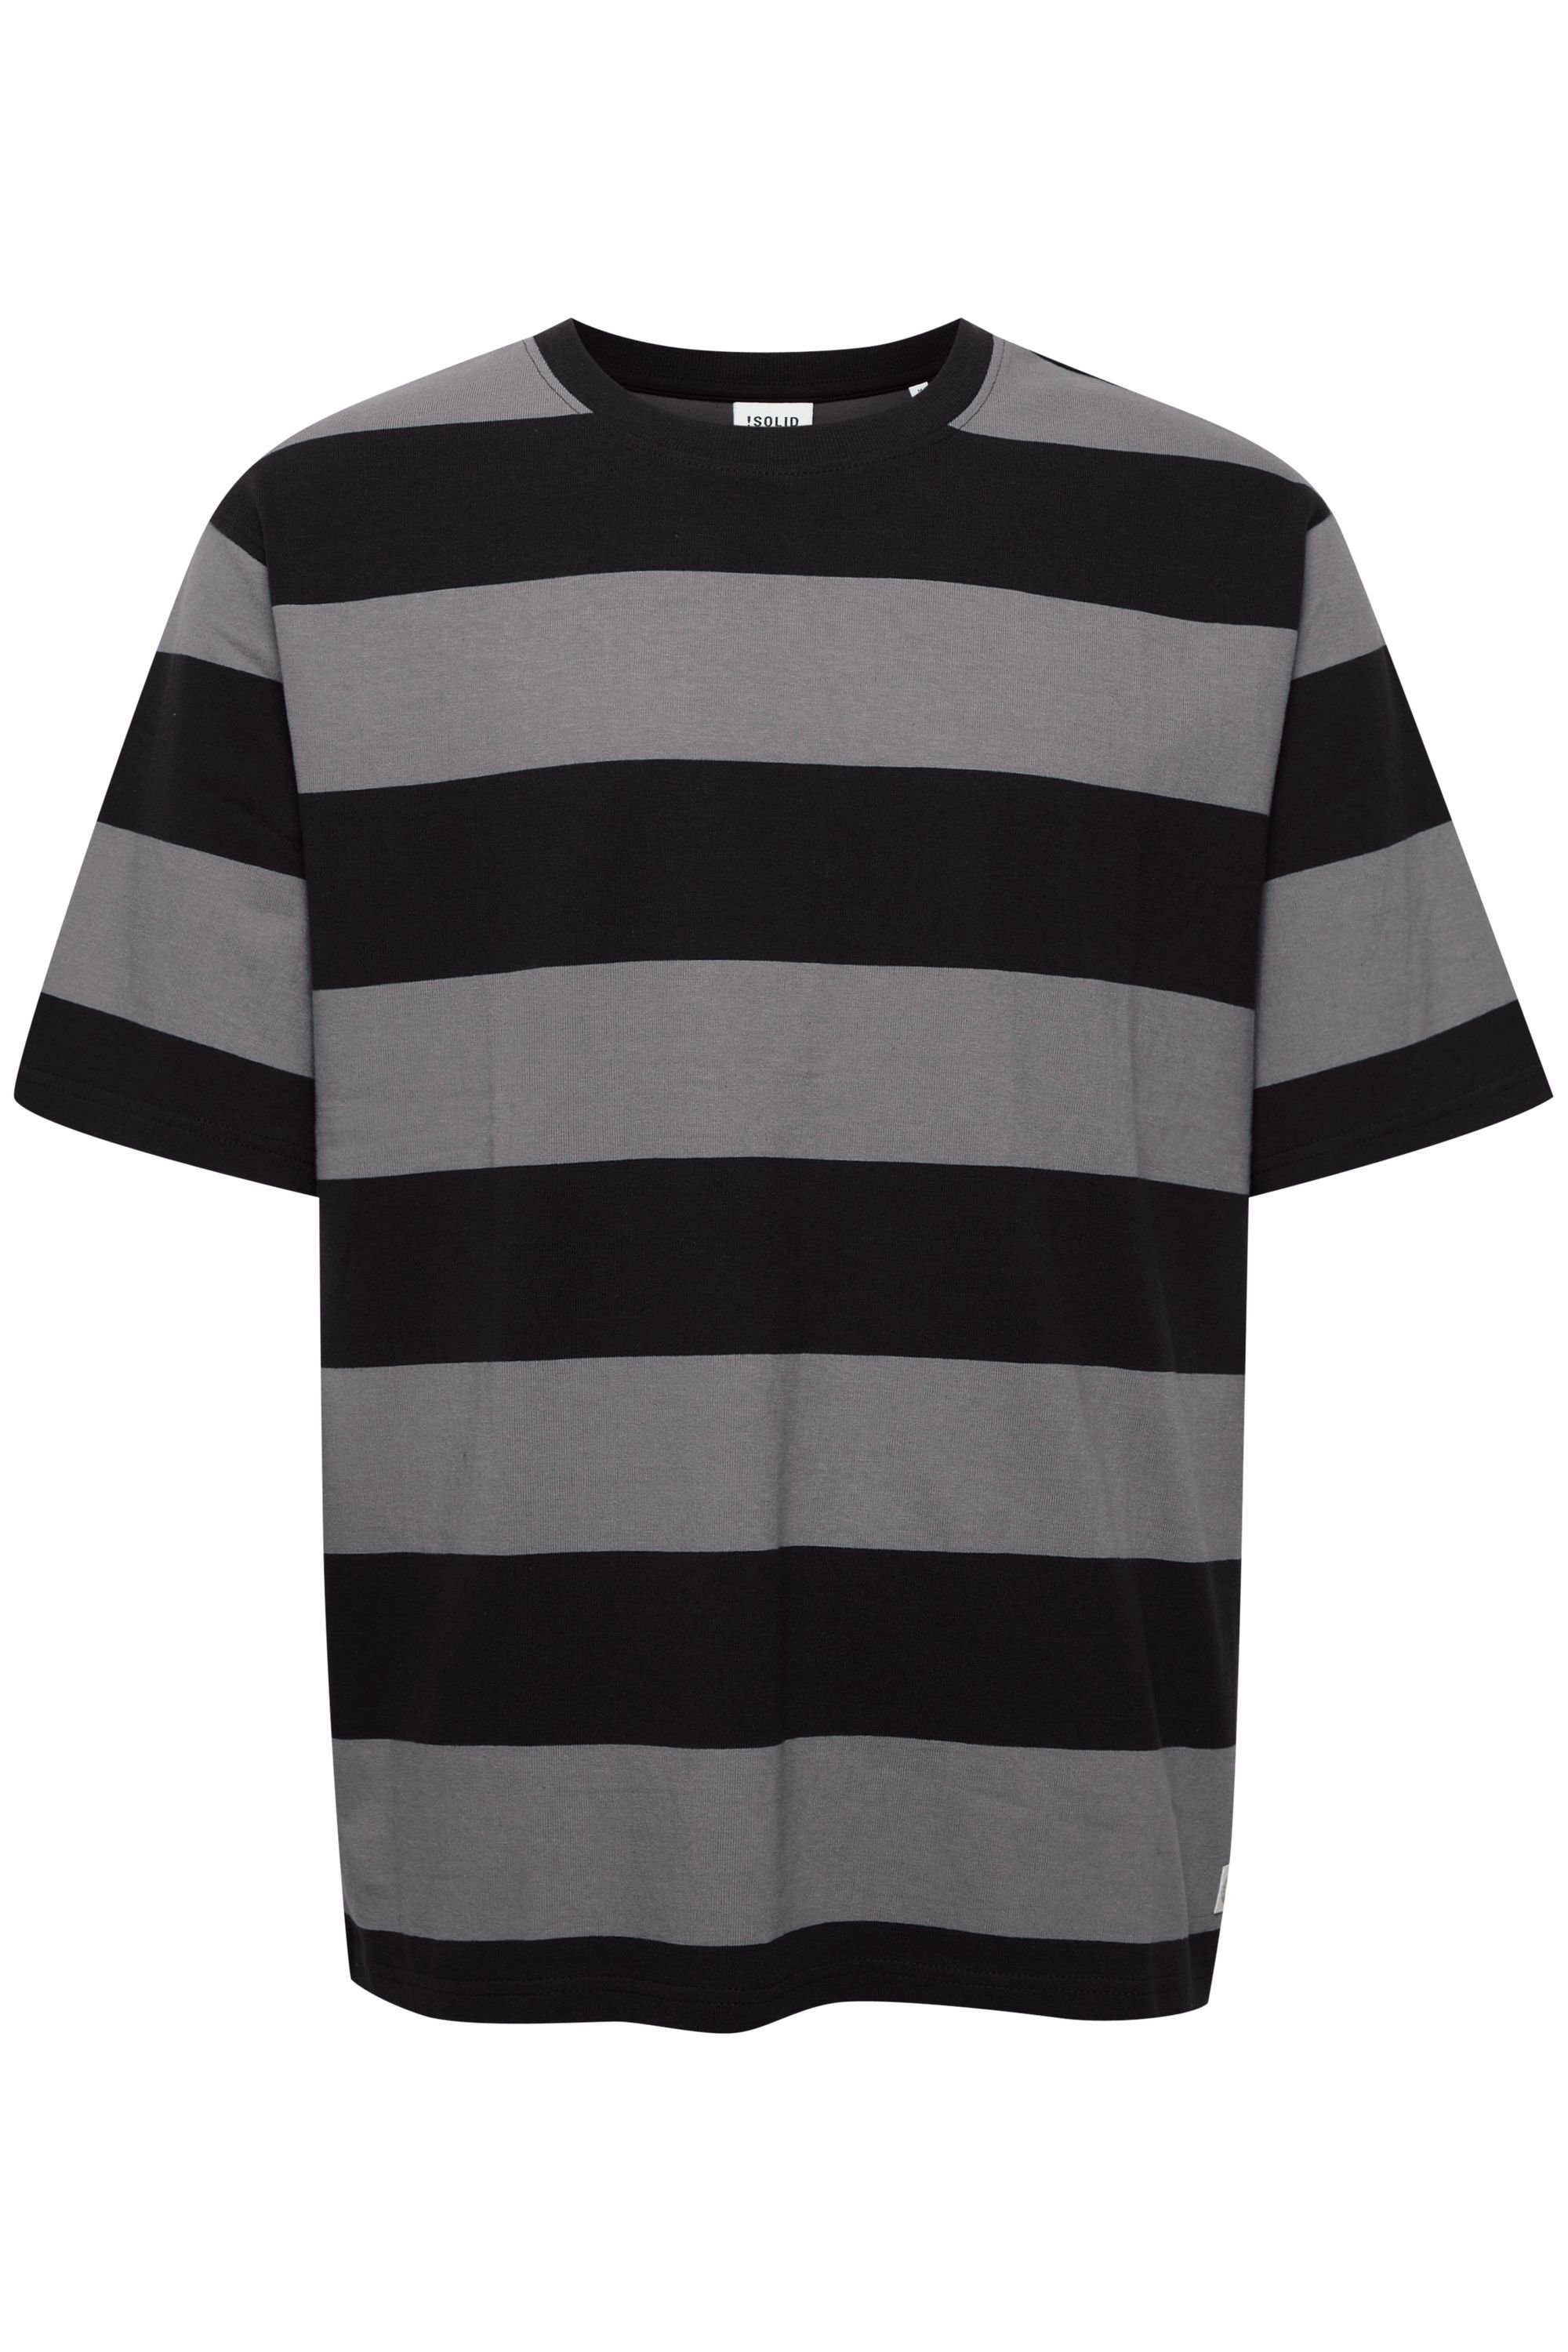 Solid T-Shirt (194008) True Black SDJoey 21300987-ME - Tee S